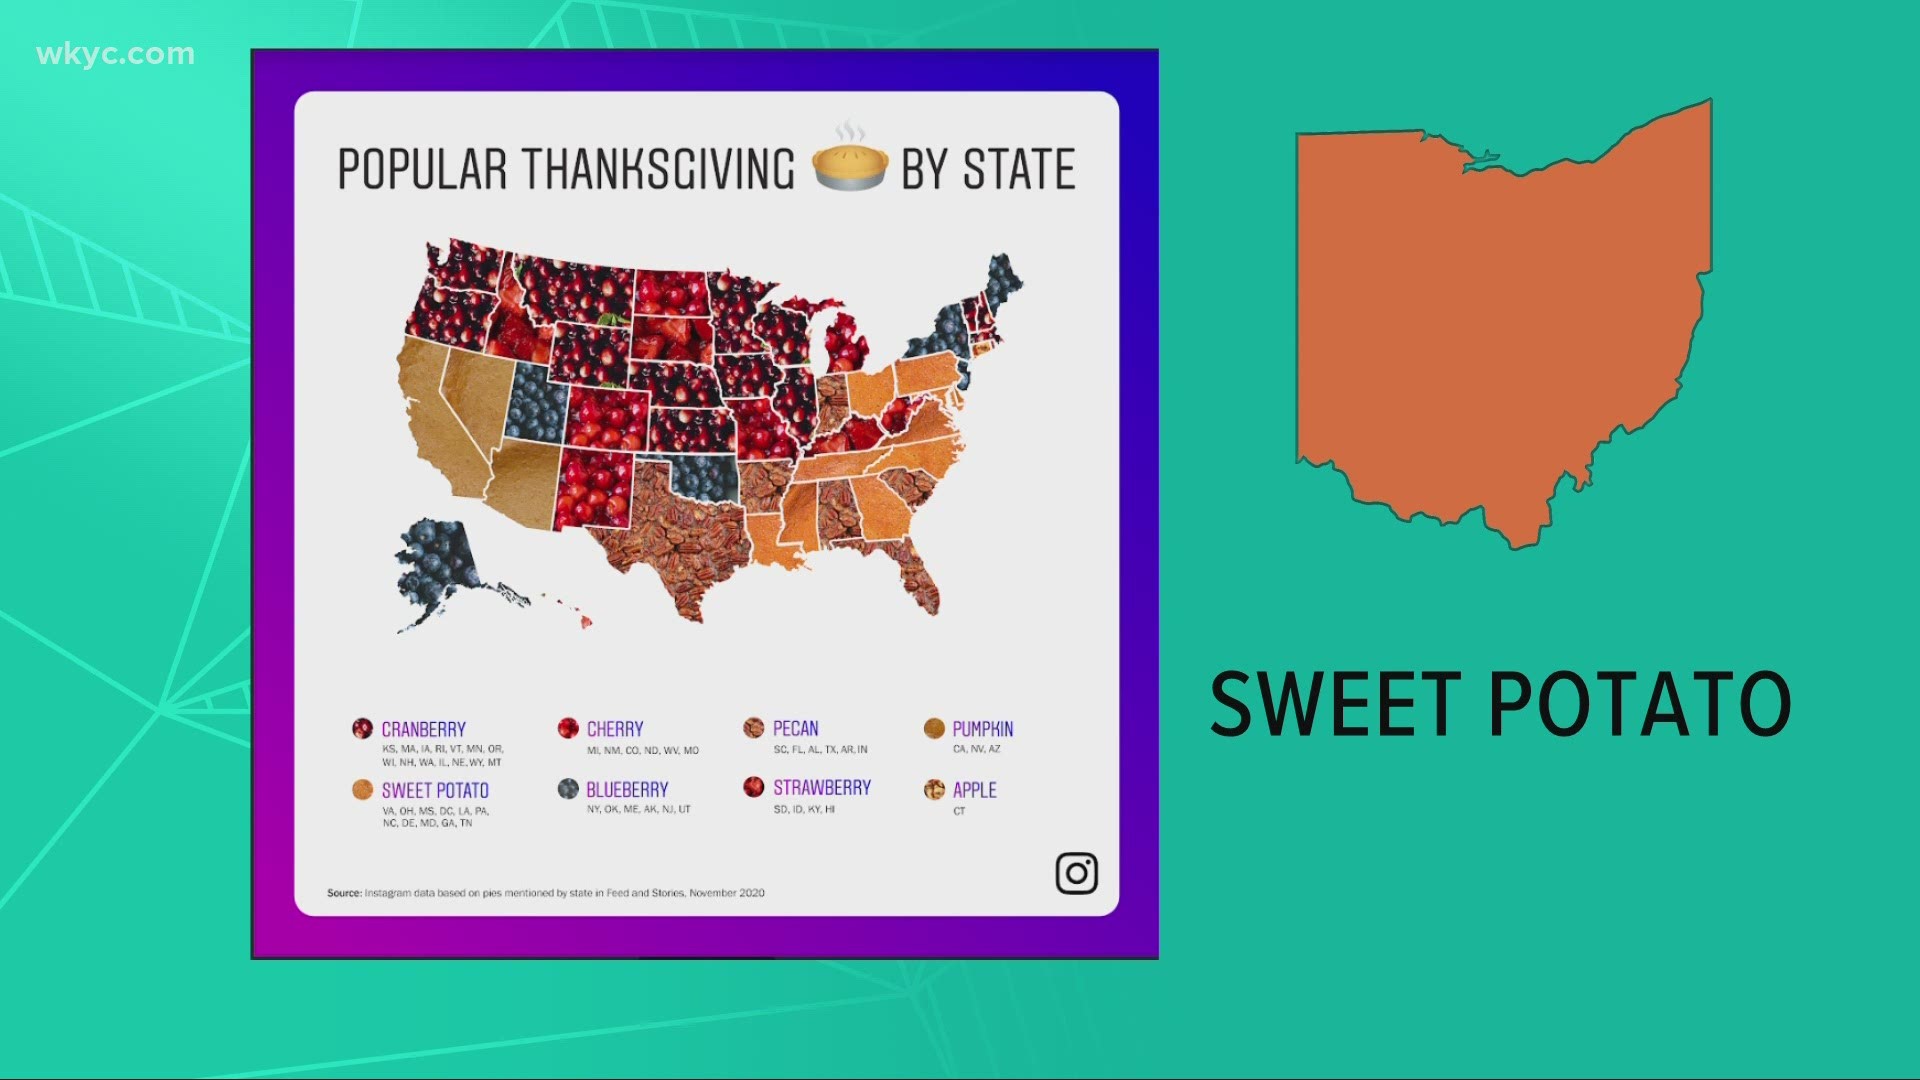 Sweet potato pie was voted as Ohio's favorite Thanksgiving pie according to an Instagram study.  Ohio is one of 11 states to pick that type of pie.